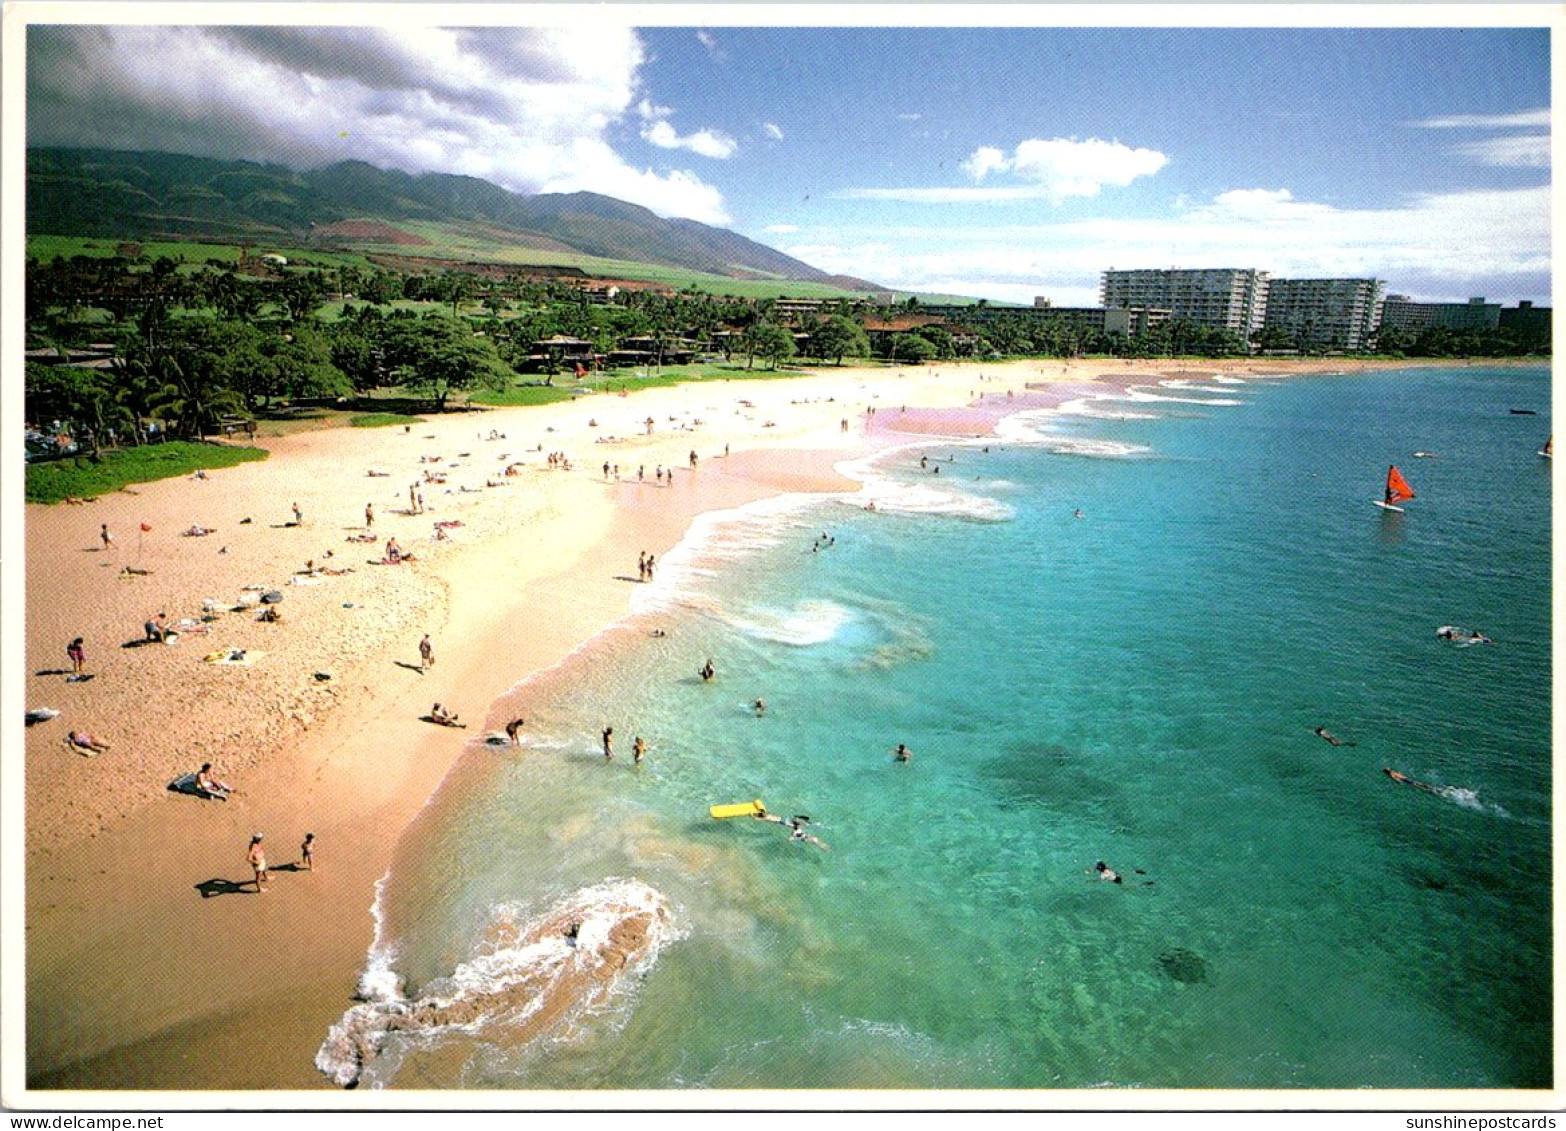 Hawaii Maui View Of Kaanapali Beach - Maui